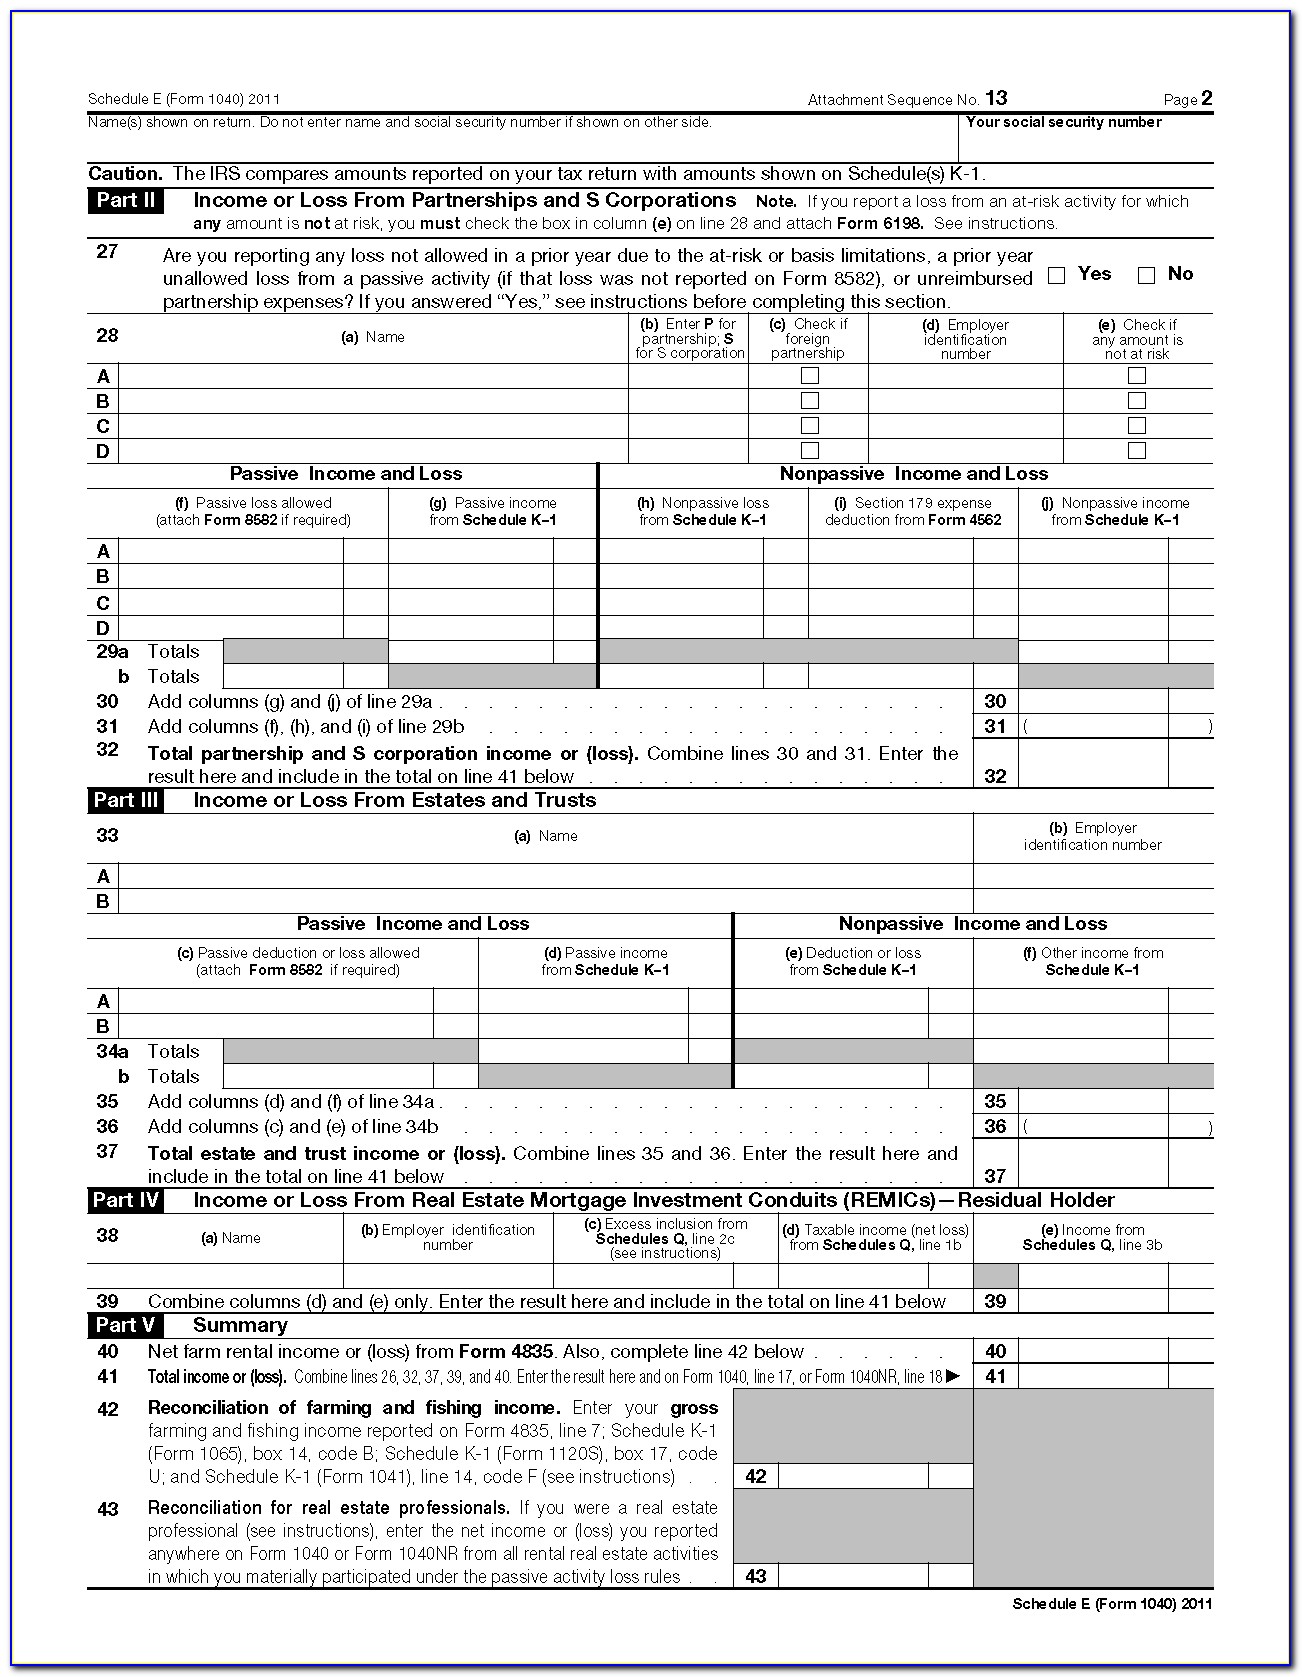 Federal Tax Form 1040a Schedule B